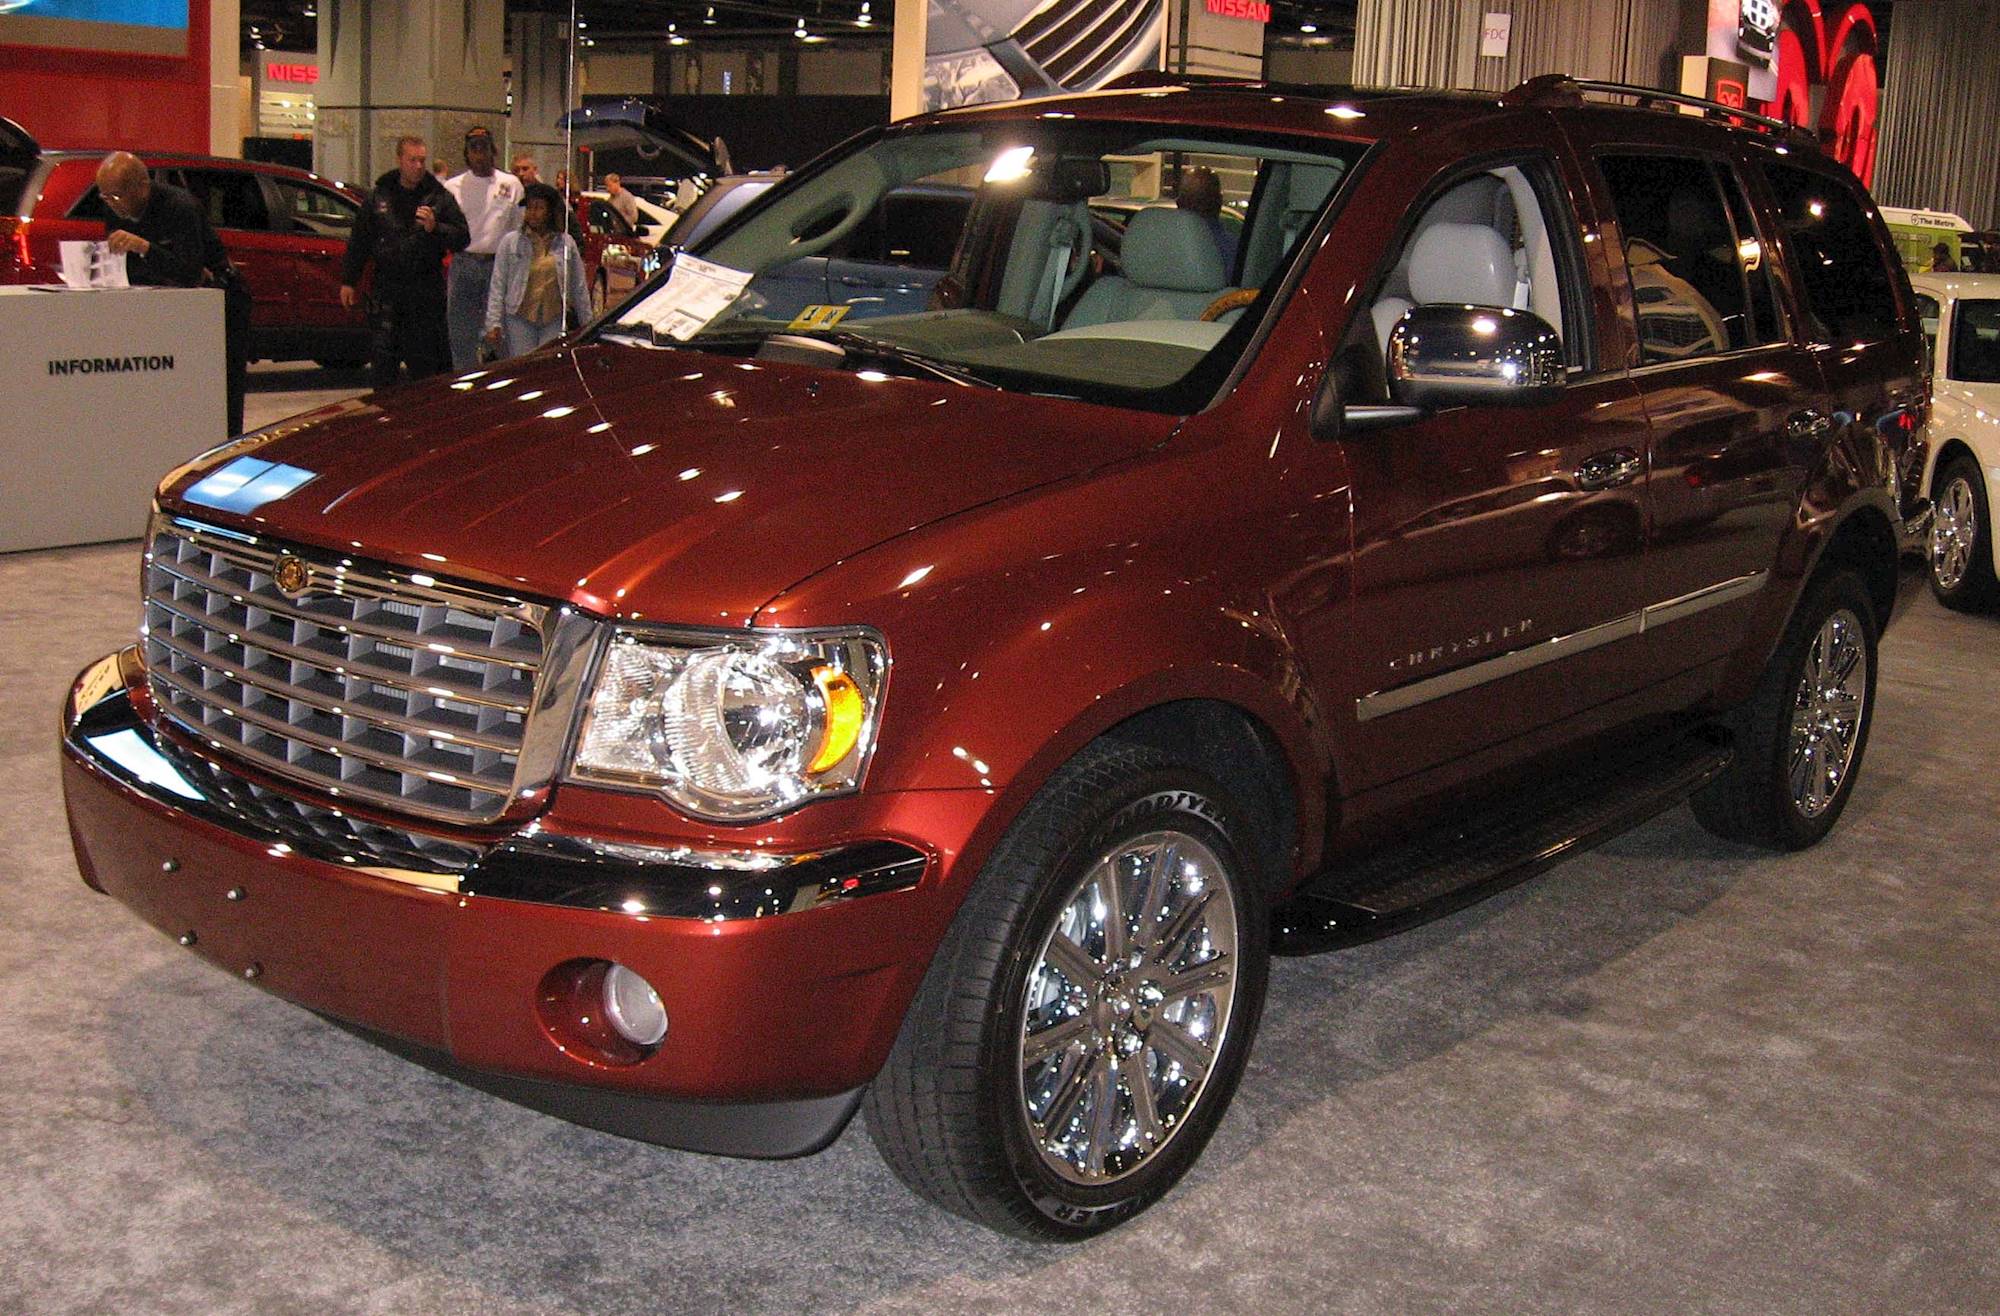 2007 Chrysler Aspen Limited - 4dr SUV 4.7L V8 auto